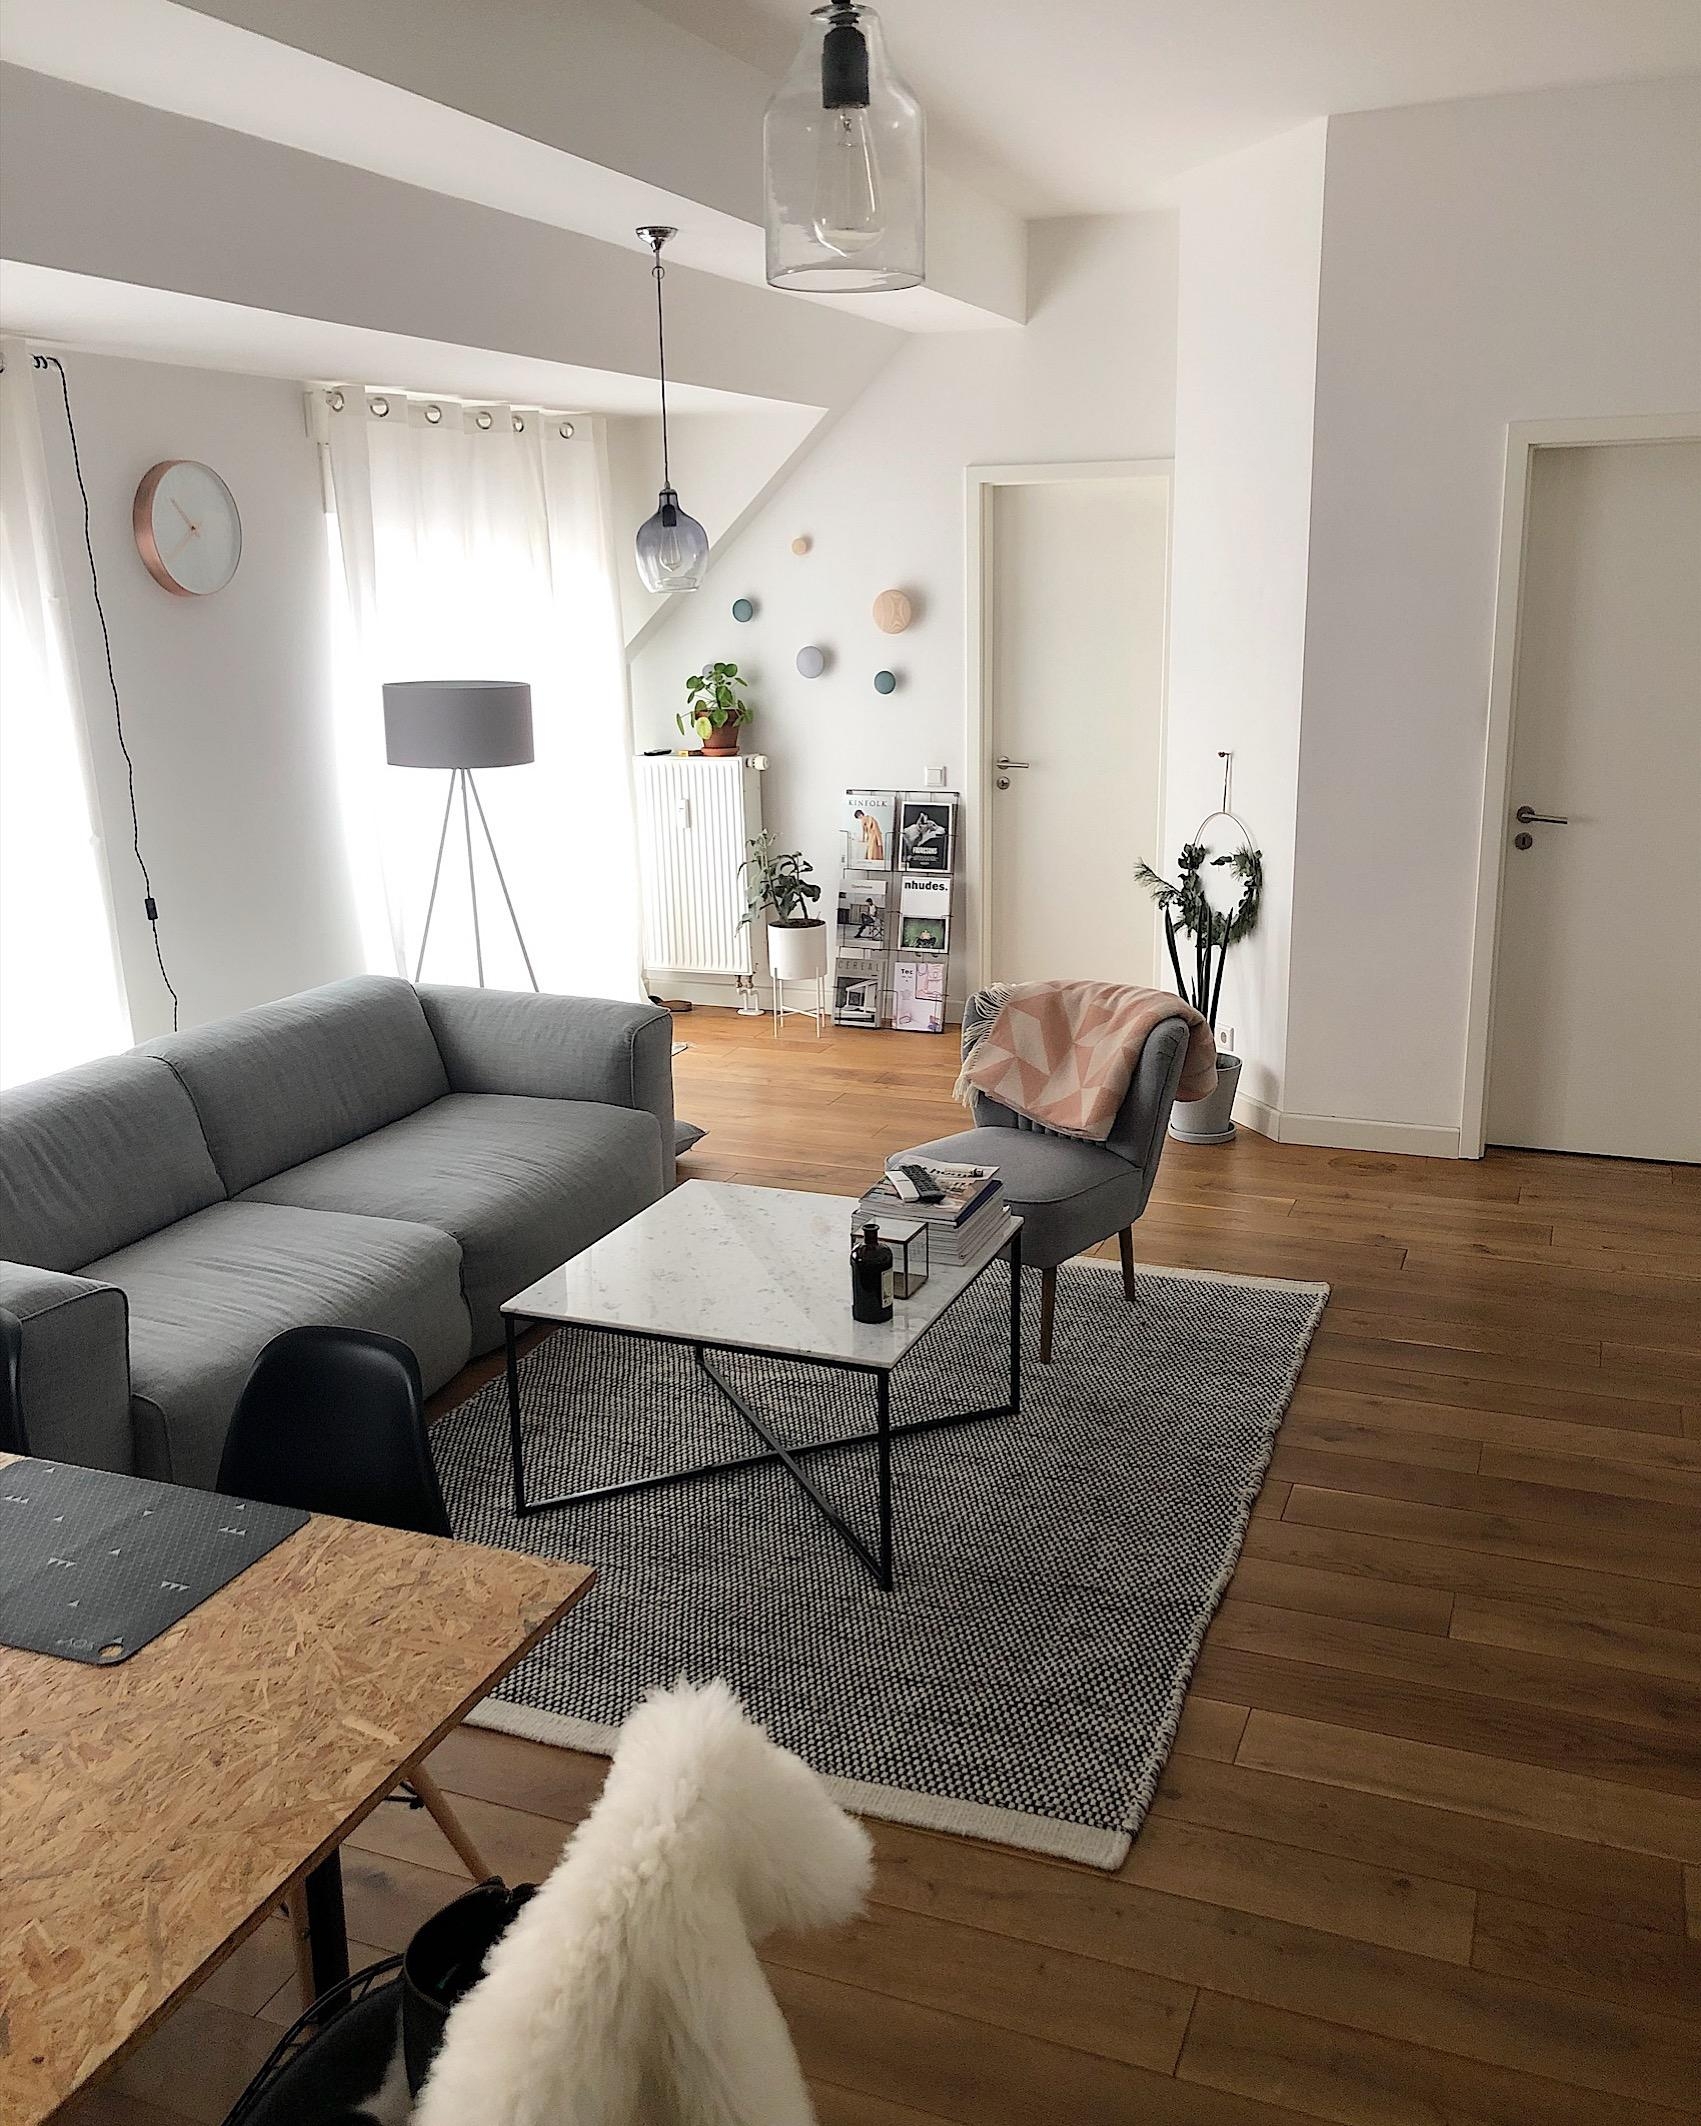 #livingroom #apartment #scandinavianhome